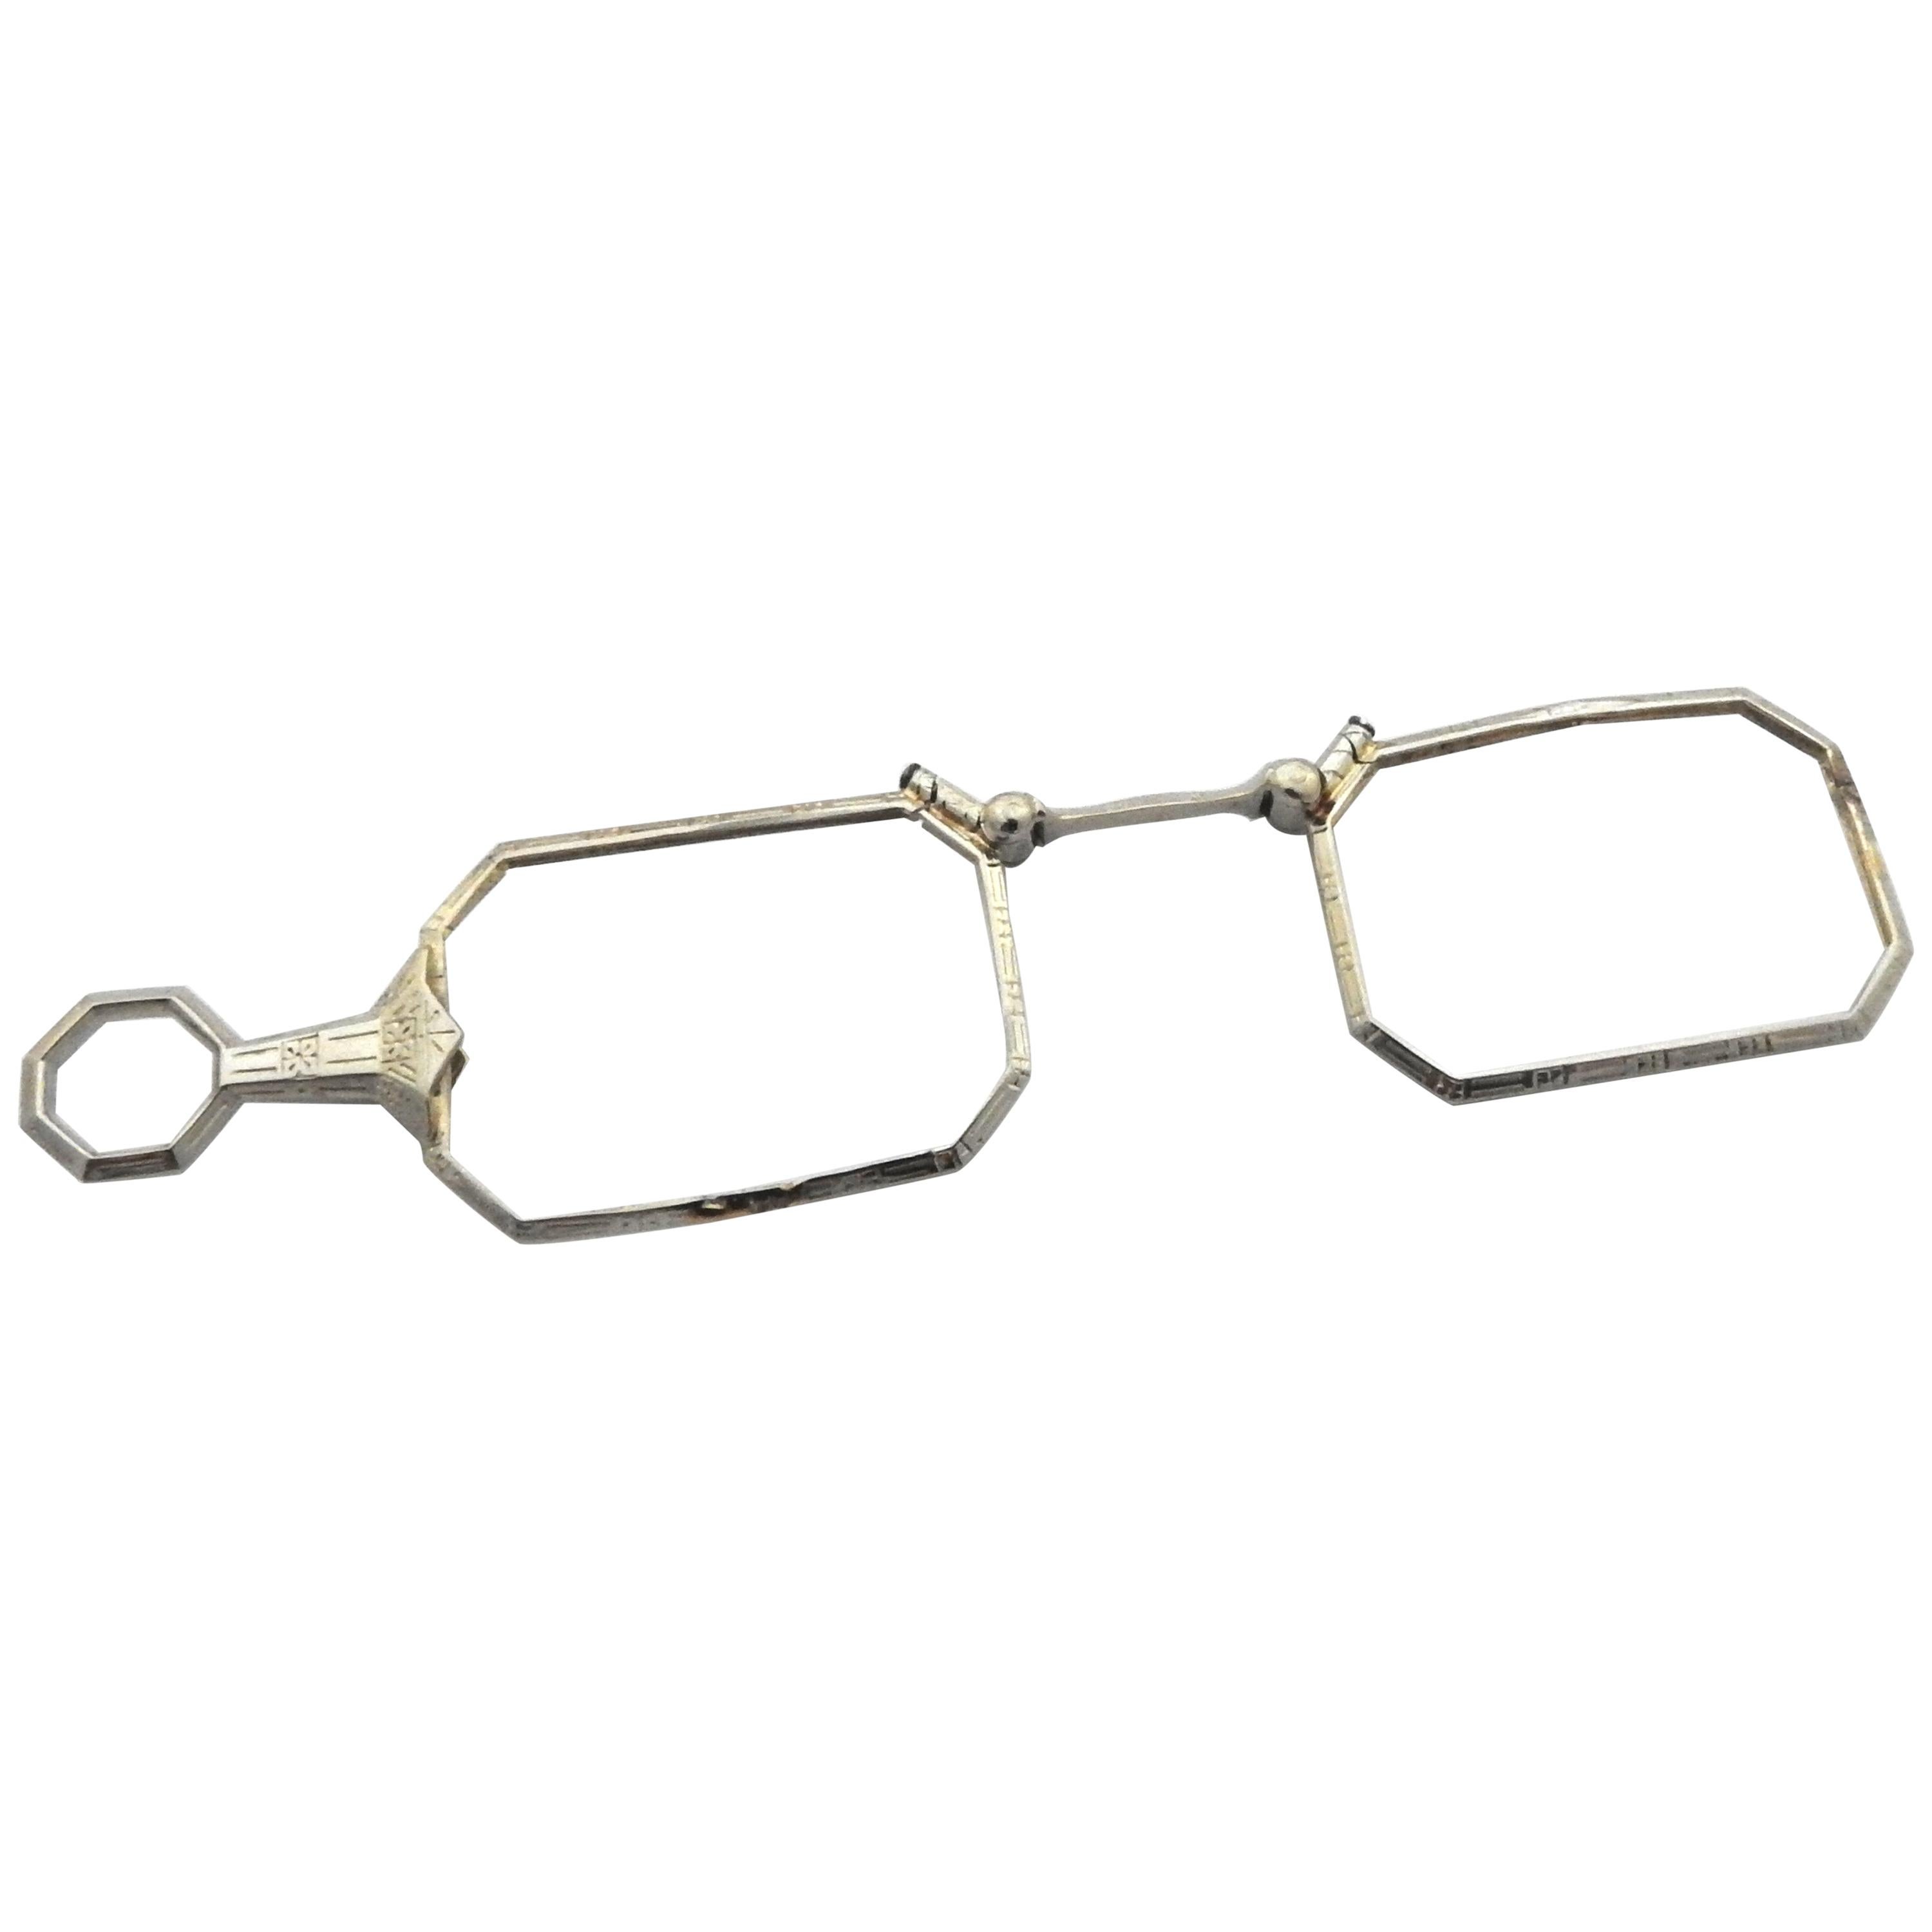 Antique 14 Karat White Gold Folding Lorgnette Eyeglass Frames, No Lens